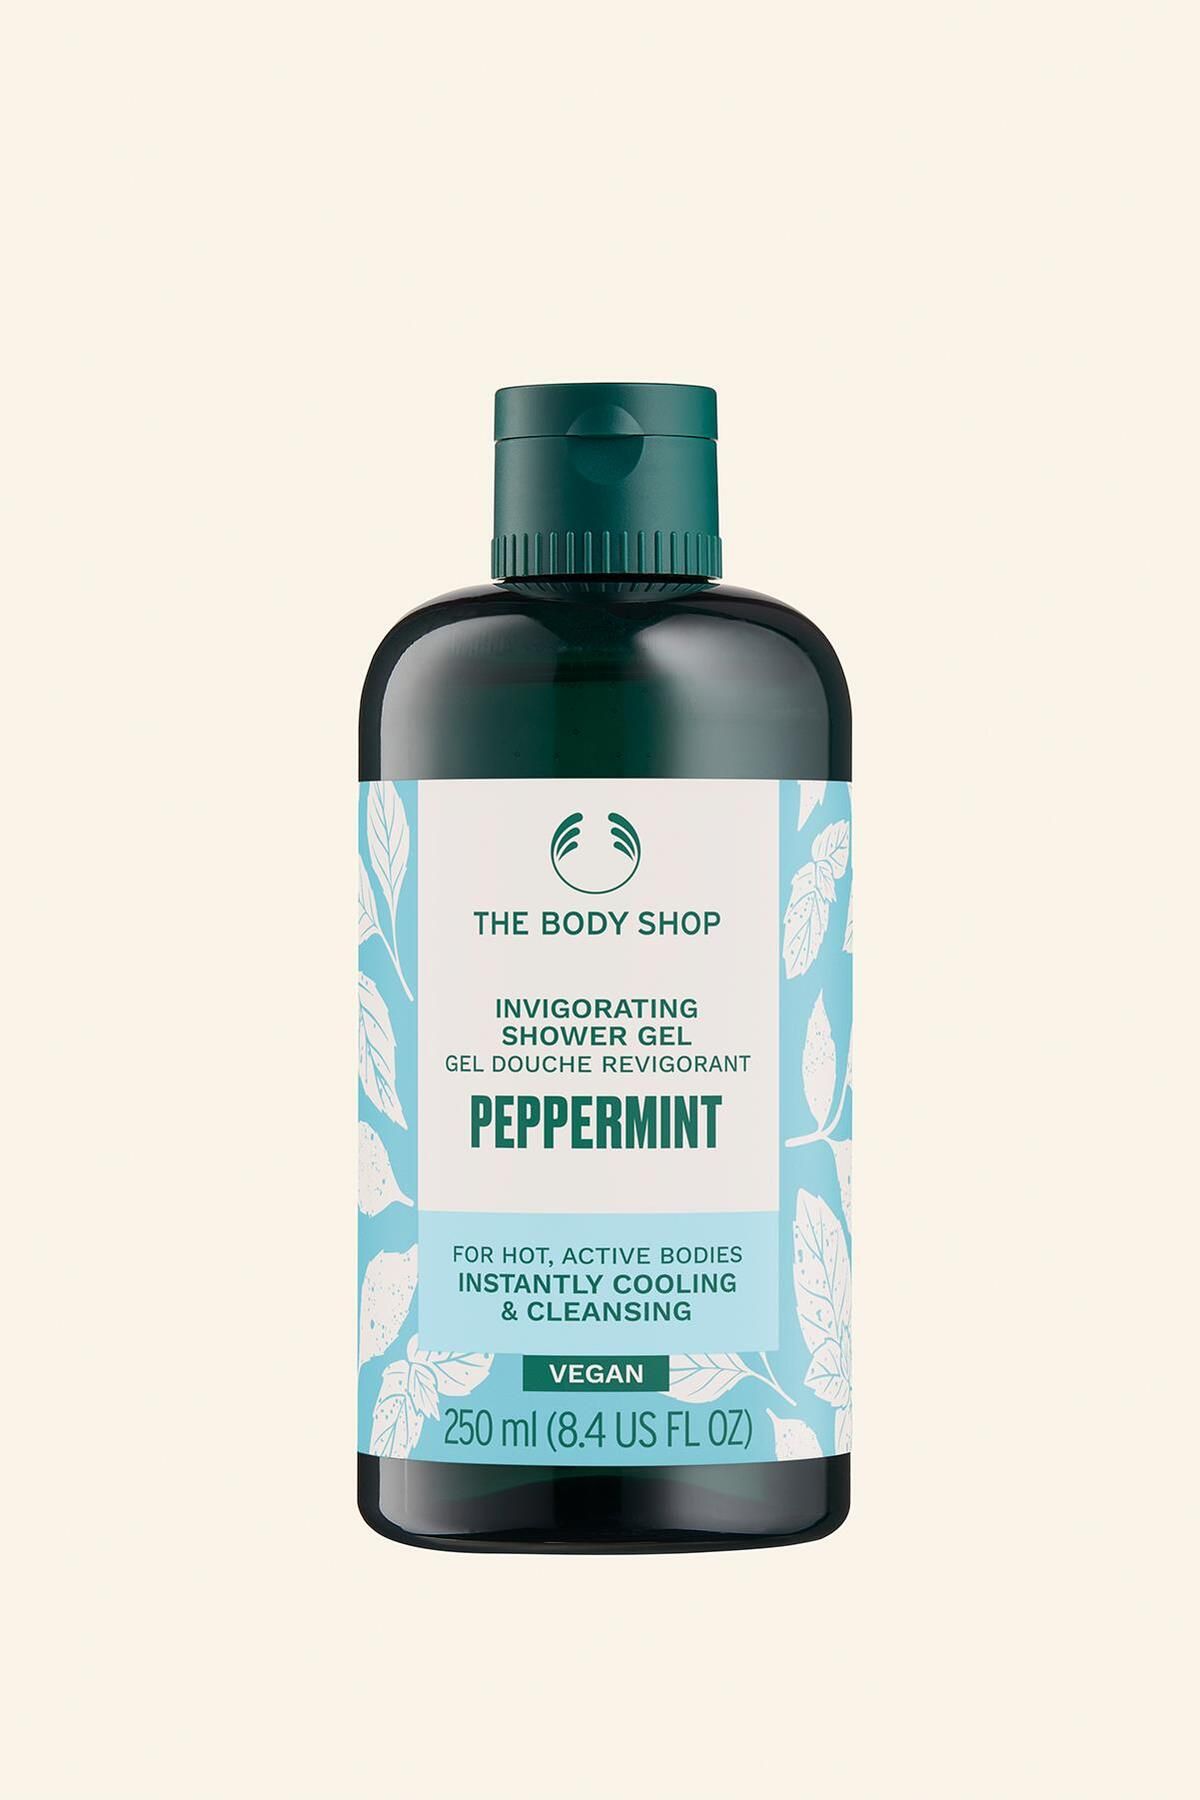 THE BODY SHOP Peppermint Serinletici Duş Jeli 250 ml